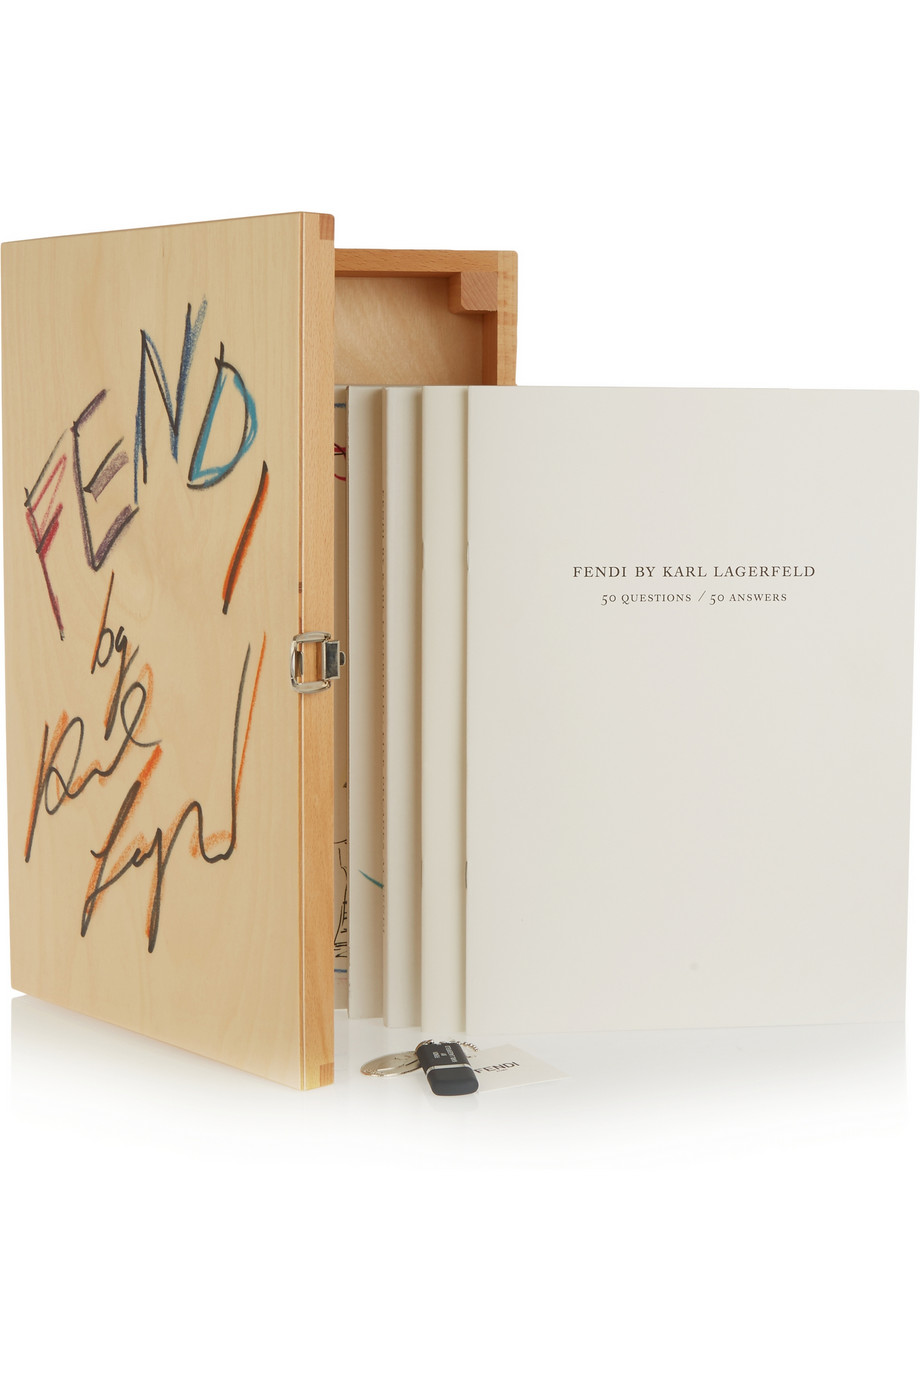 Caffee Table Books Karl Lagerfeld Fendi 50 Years 1